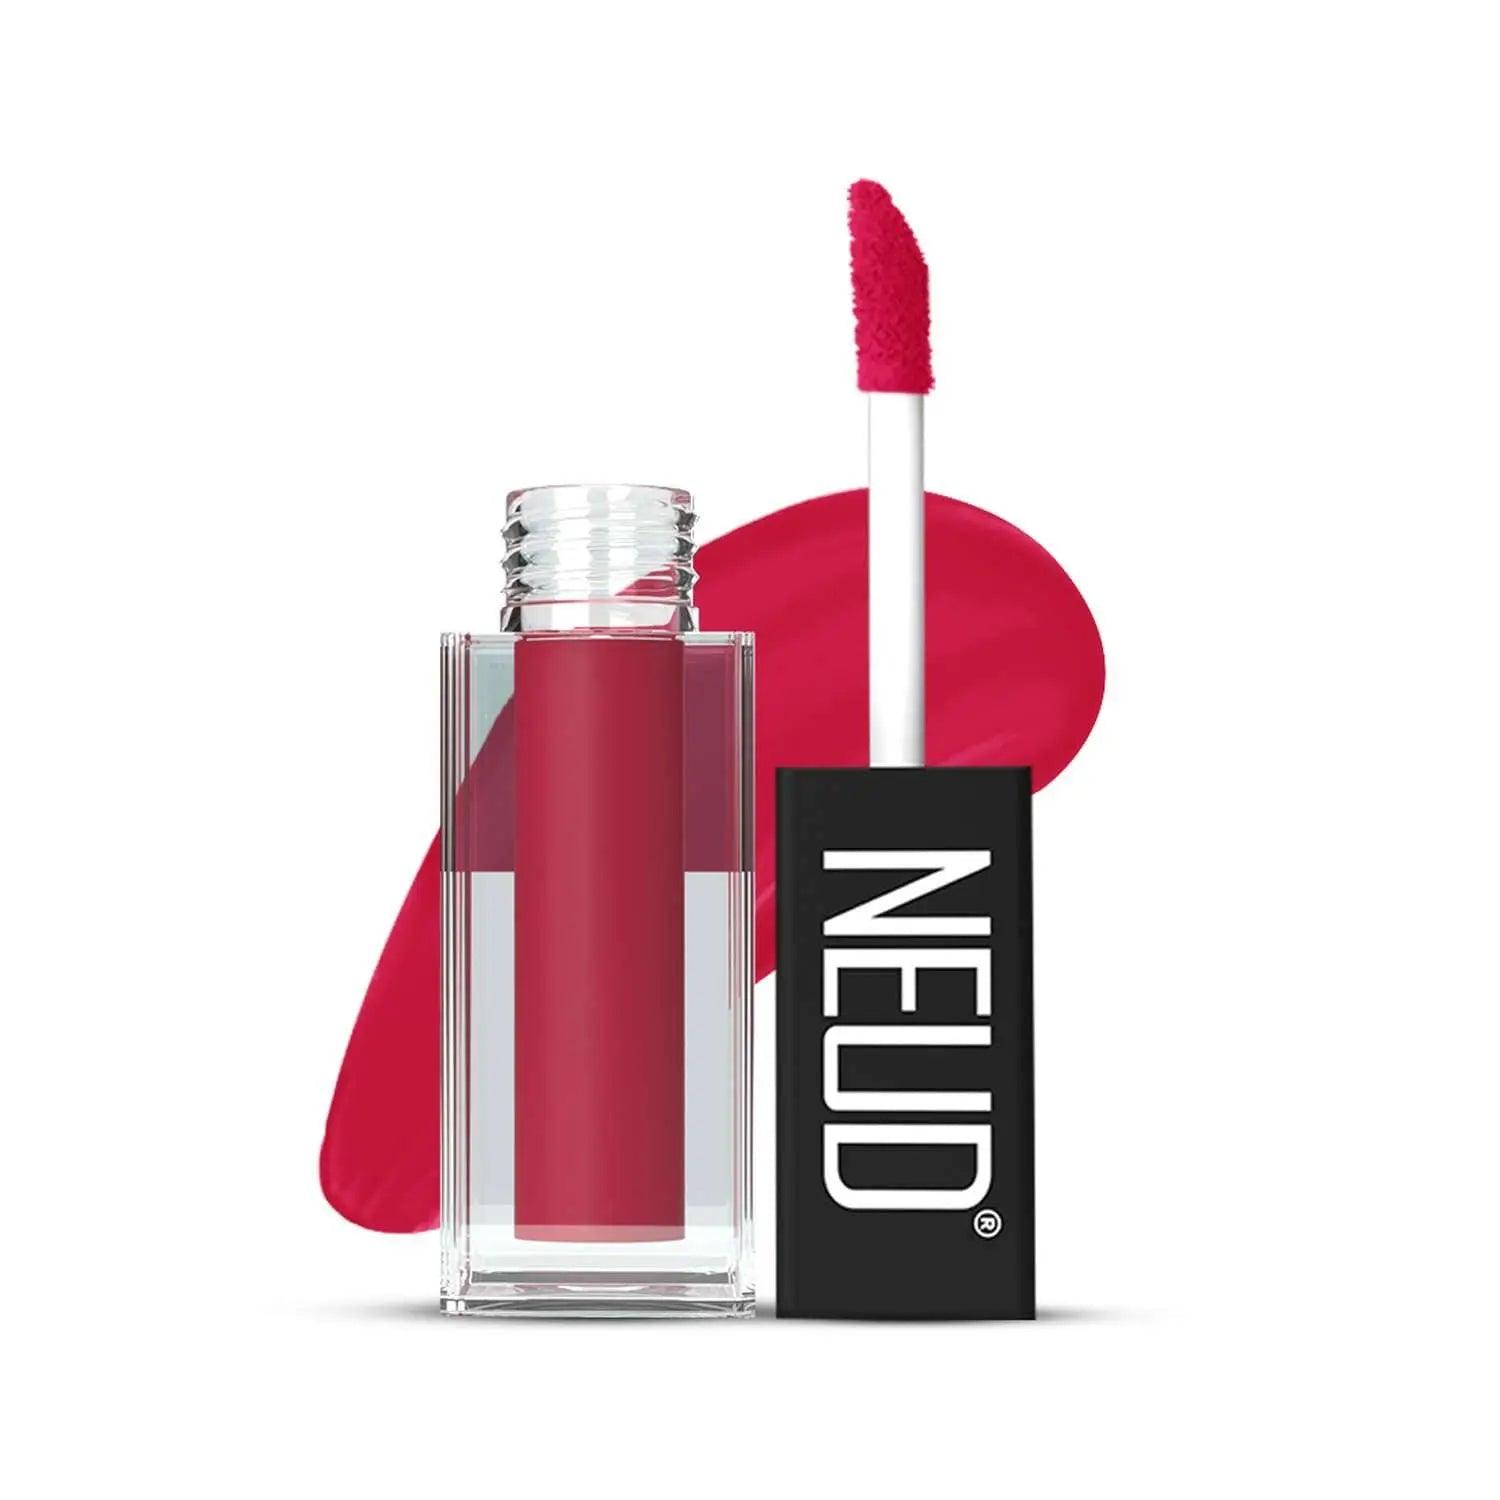 NEUD Matte Liquid Lipstick Hottie Crush with Jojoba Oil, Vitamin E and Almond Oil - Smudge Proof 12-hour Stay Formula with Free Lip Gloss